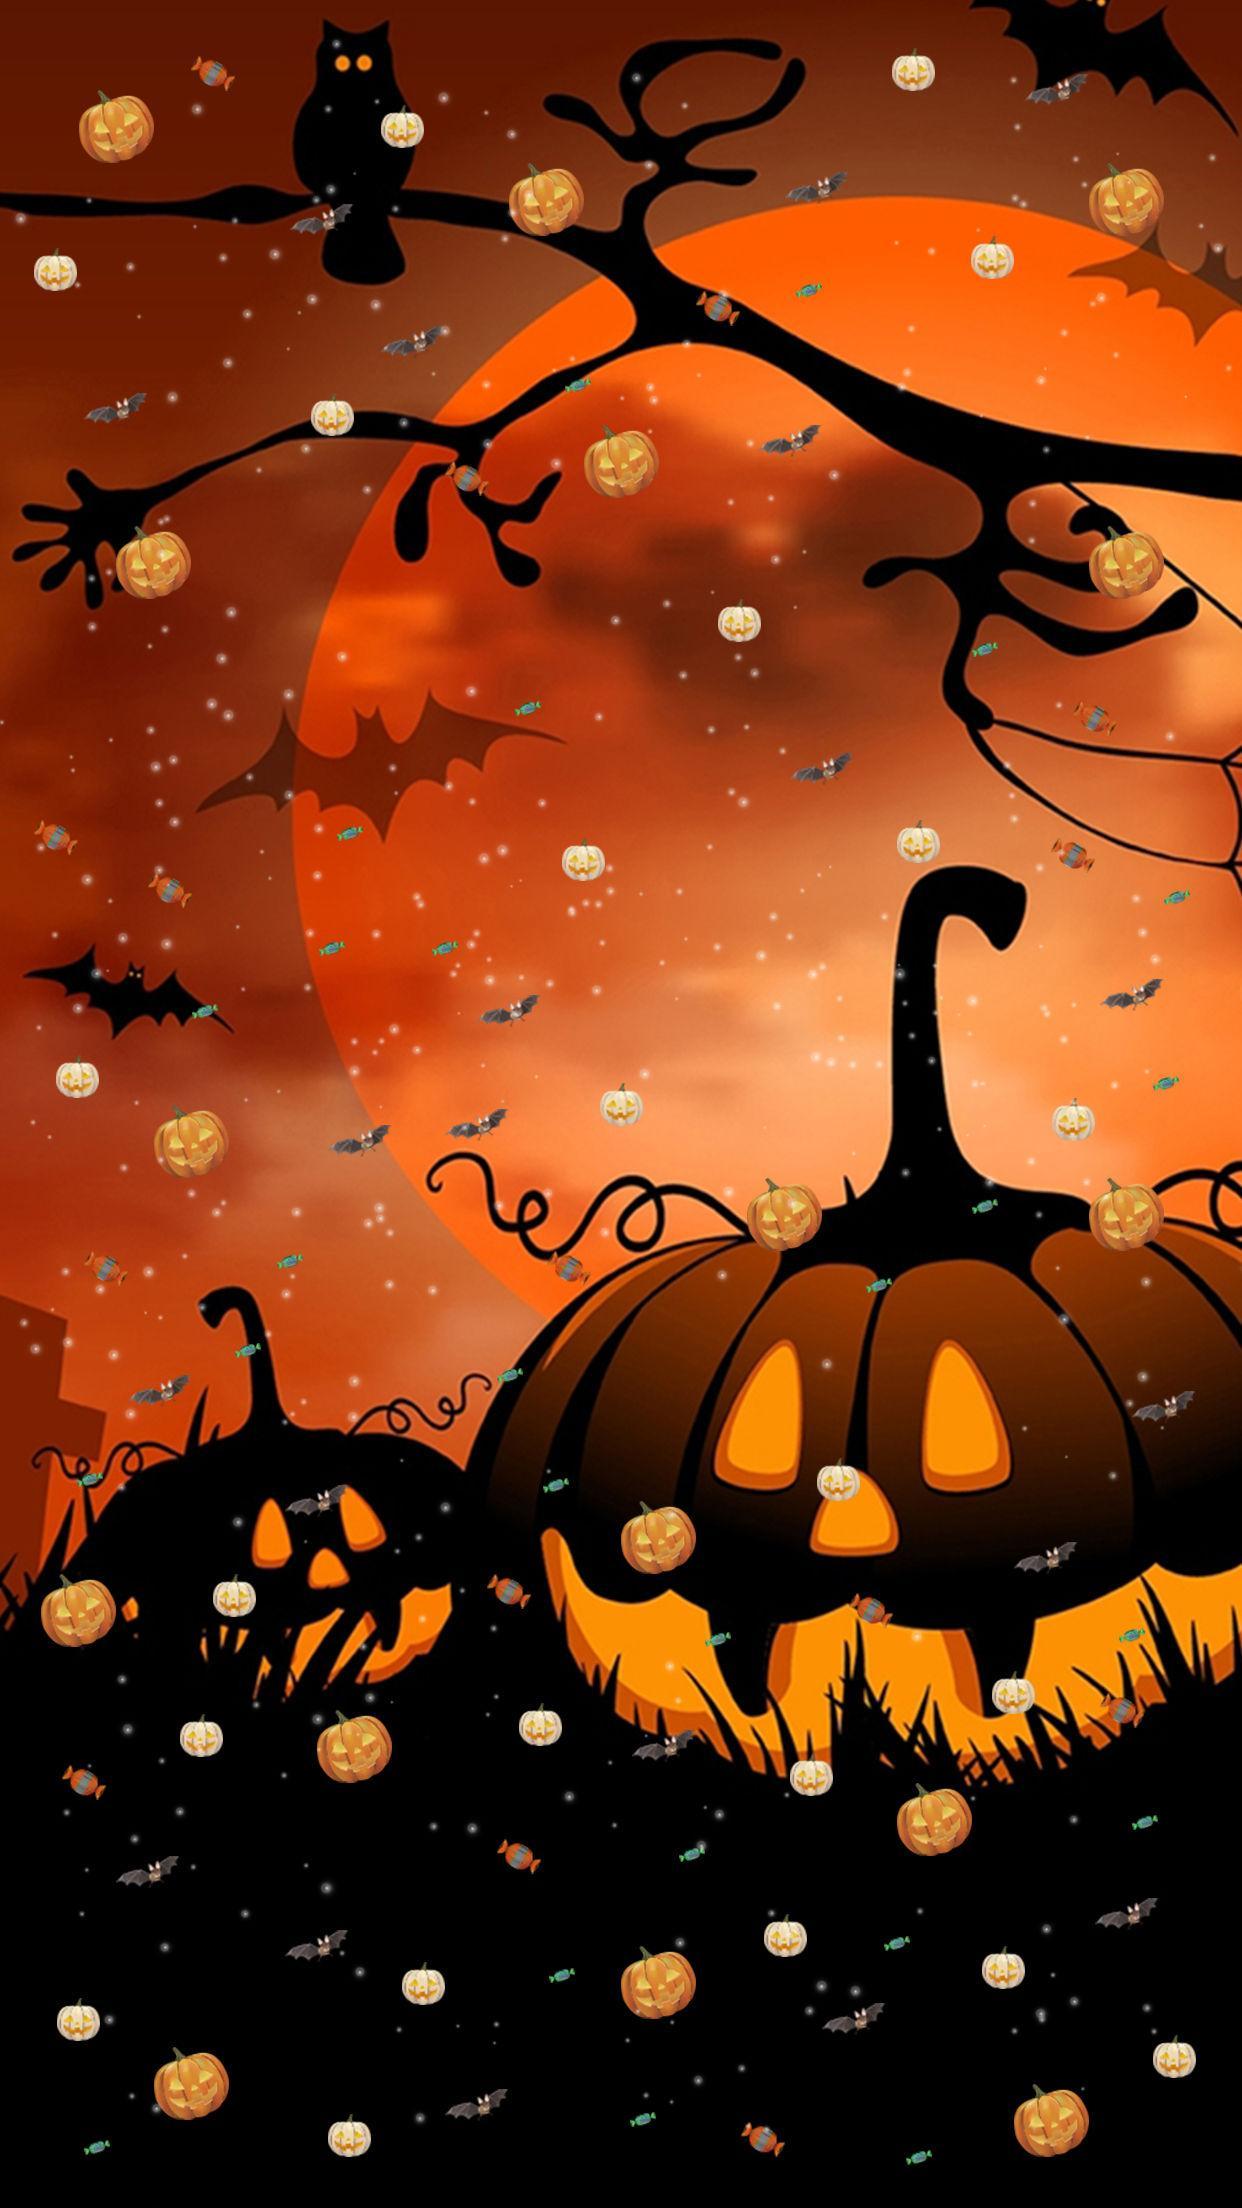 Fondos De Pantalla De Halloween For Android Apk Download - roblox best events 2019 pumpkin beans